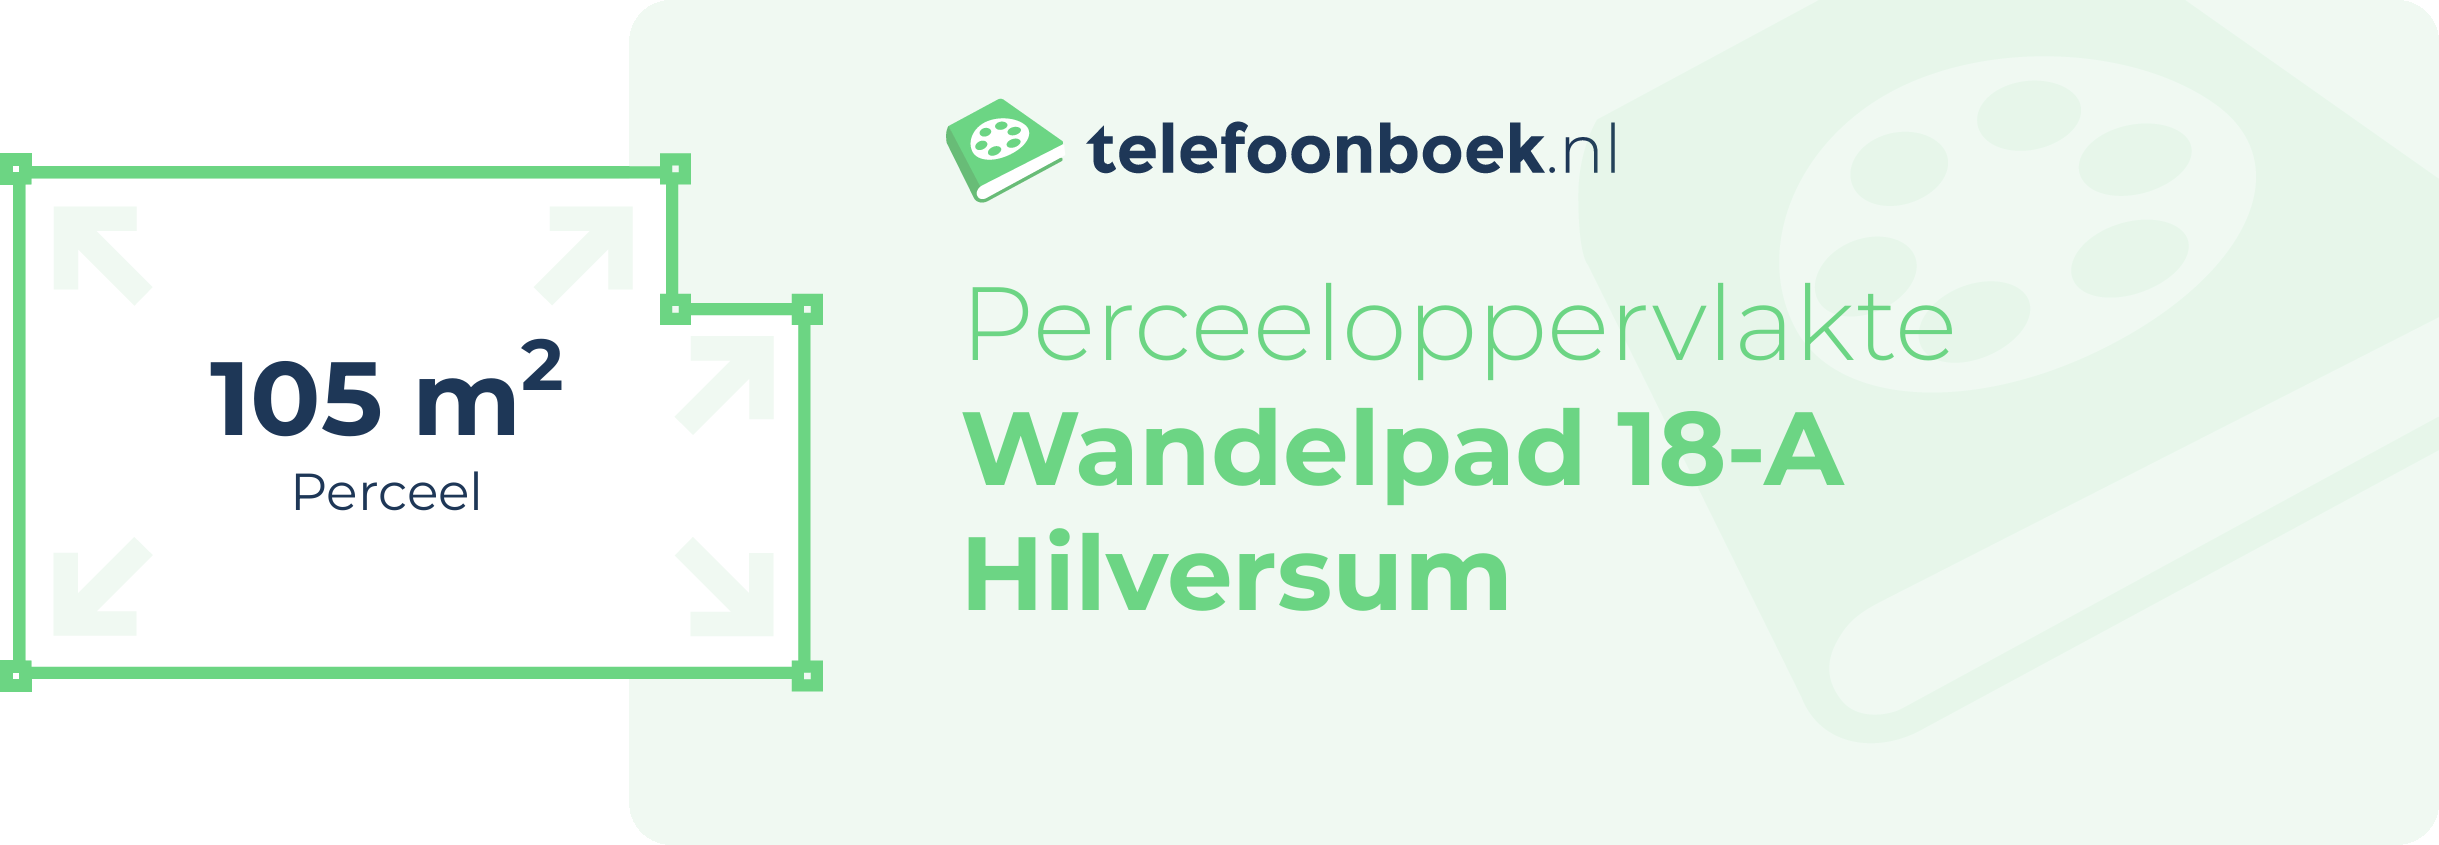 Perceeloppervlakte Wandelpad 18-A Hilversum